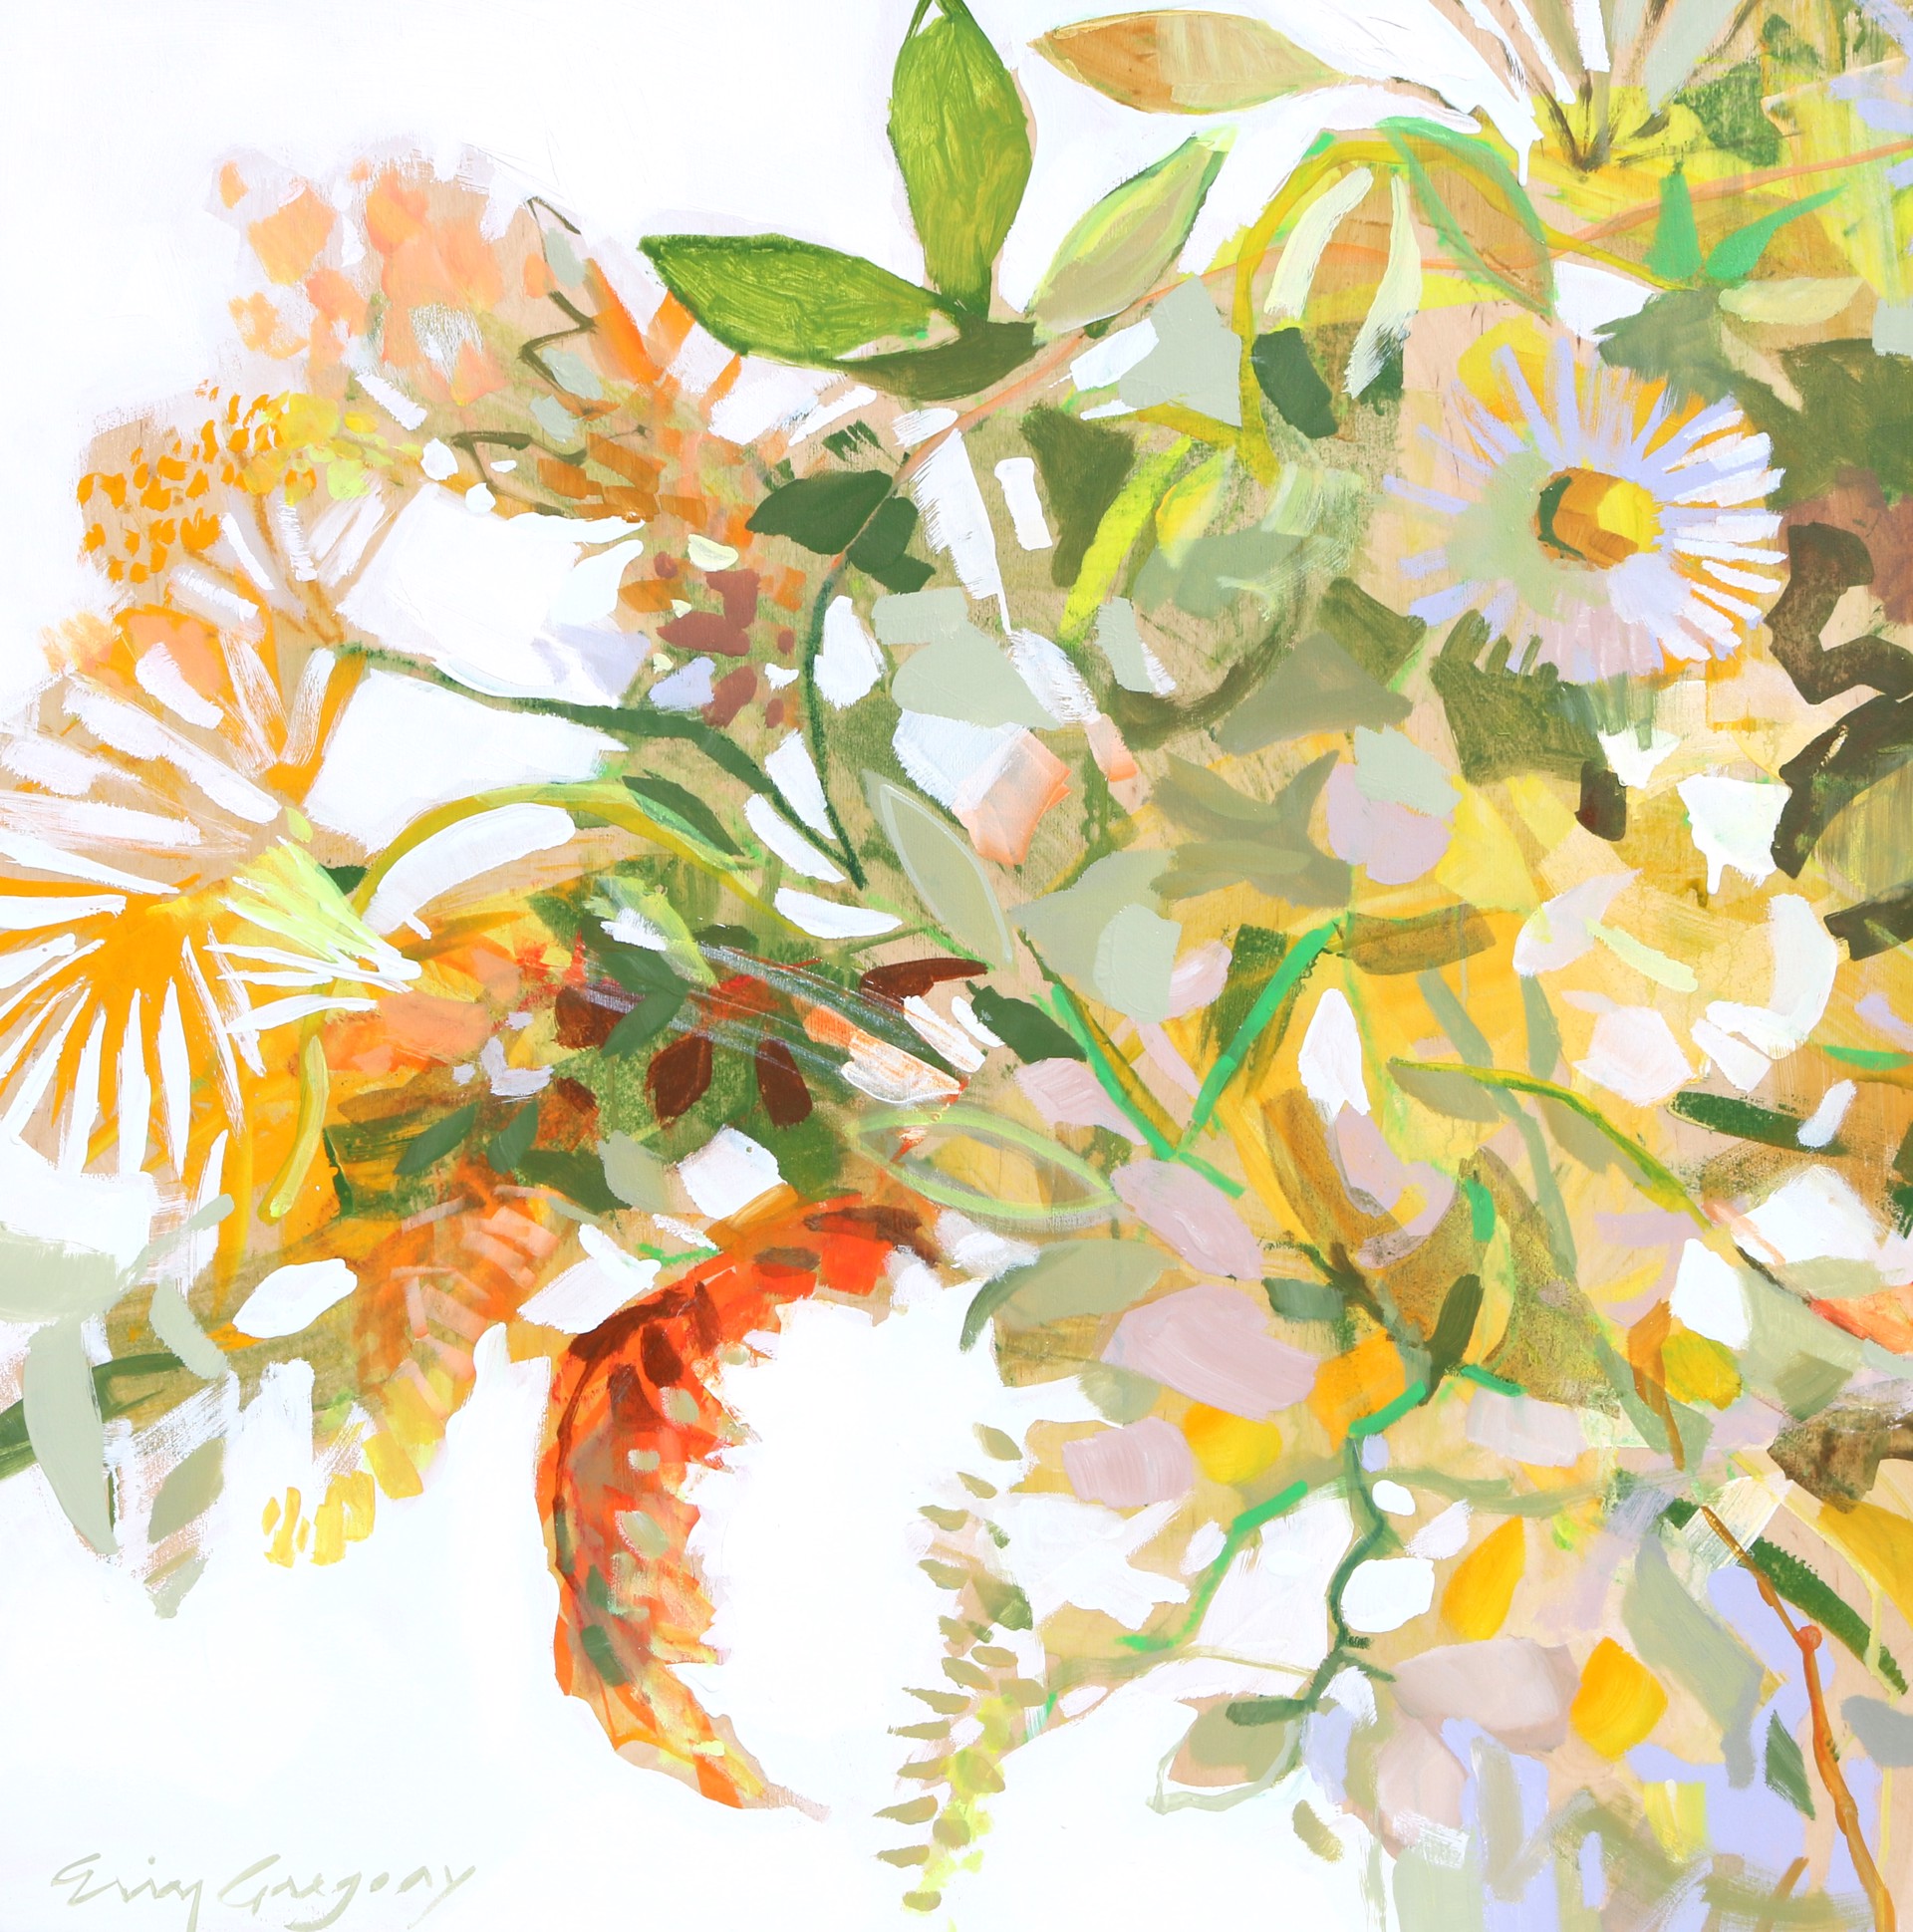 Splendor of Spring 1 by Erin Gregory